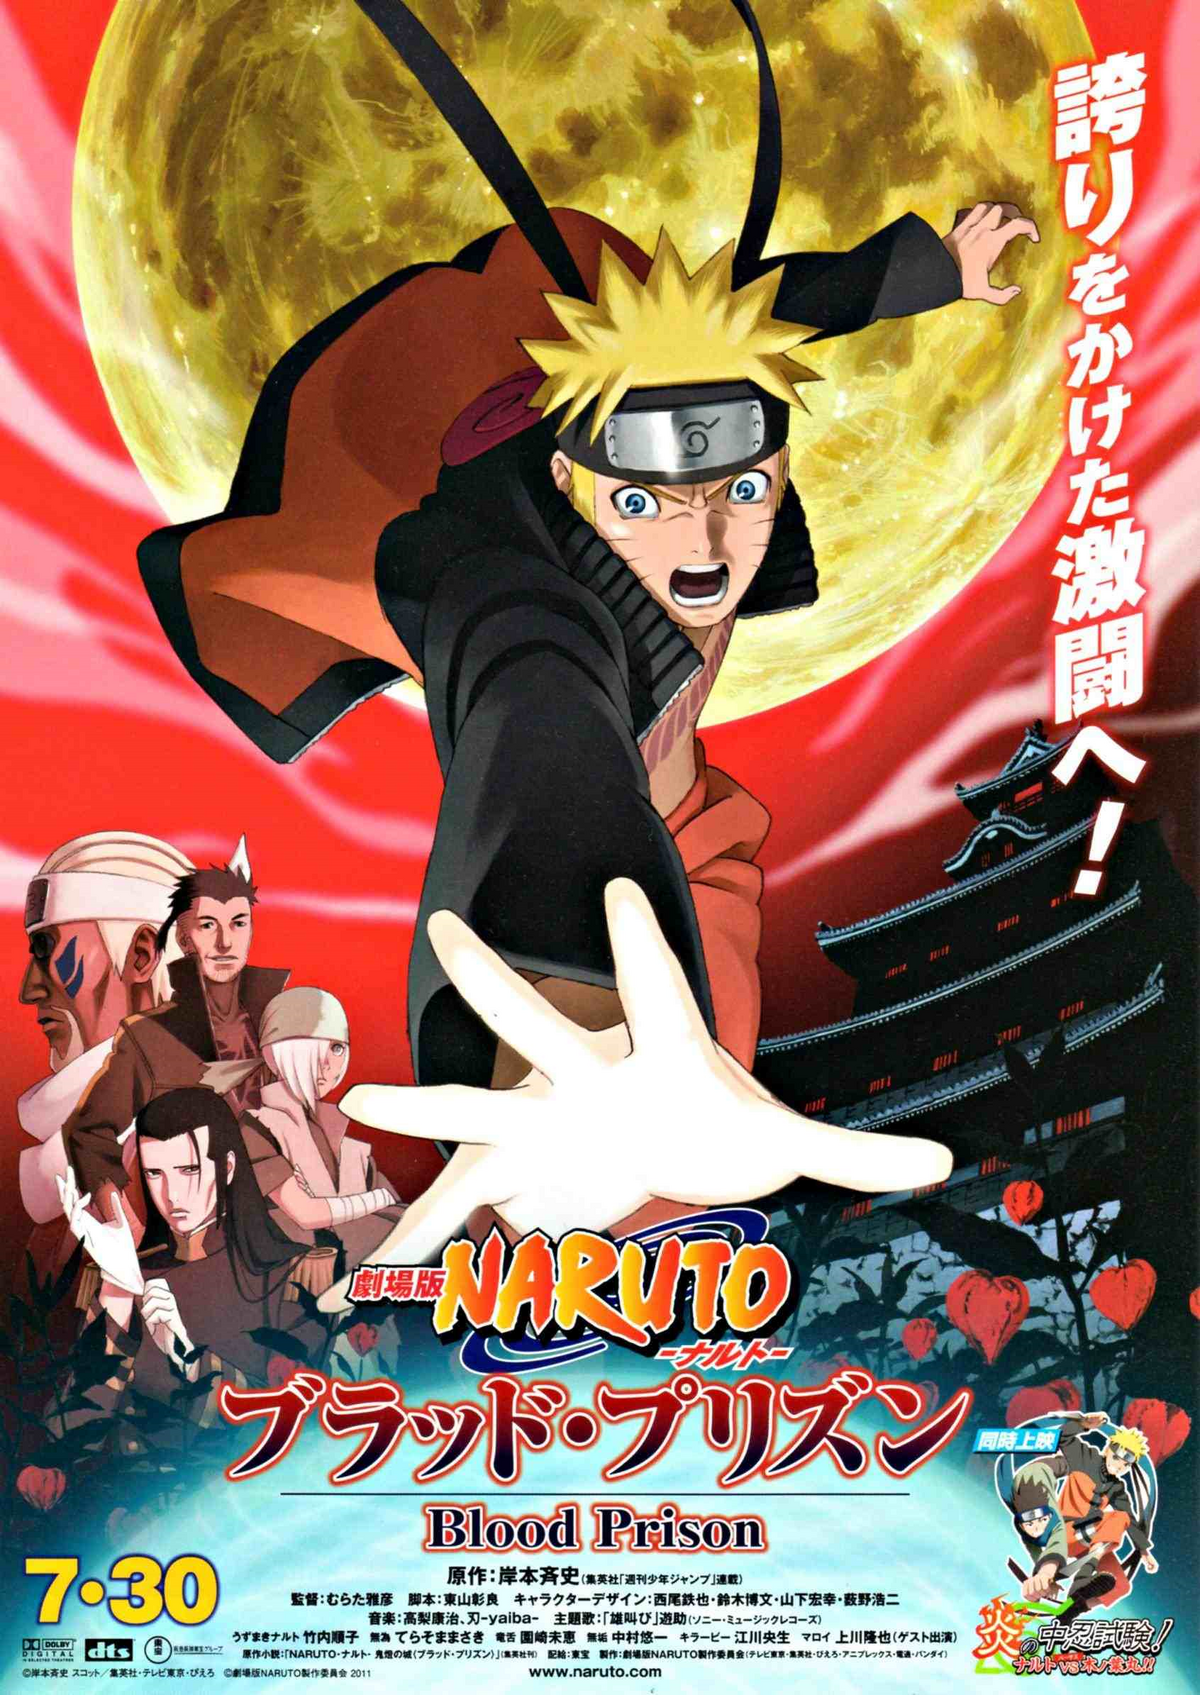 Naruto Shippuden the Movie Rasengan Collection